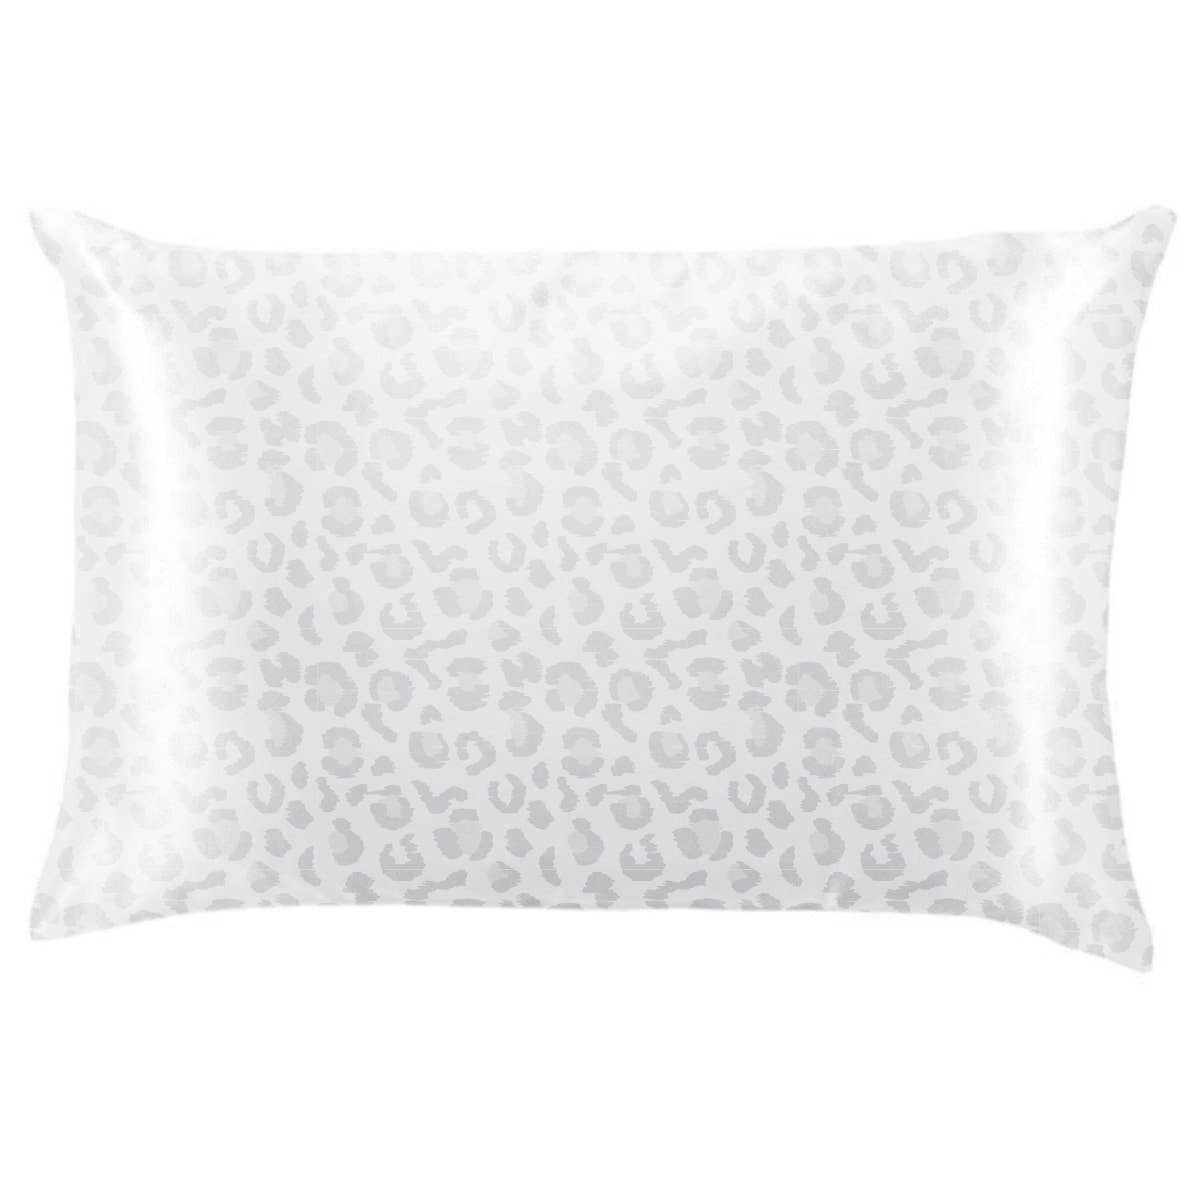 Lemon Lavender Printed Silky Satin Pillow Assortment